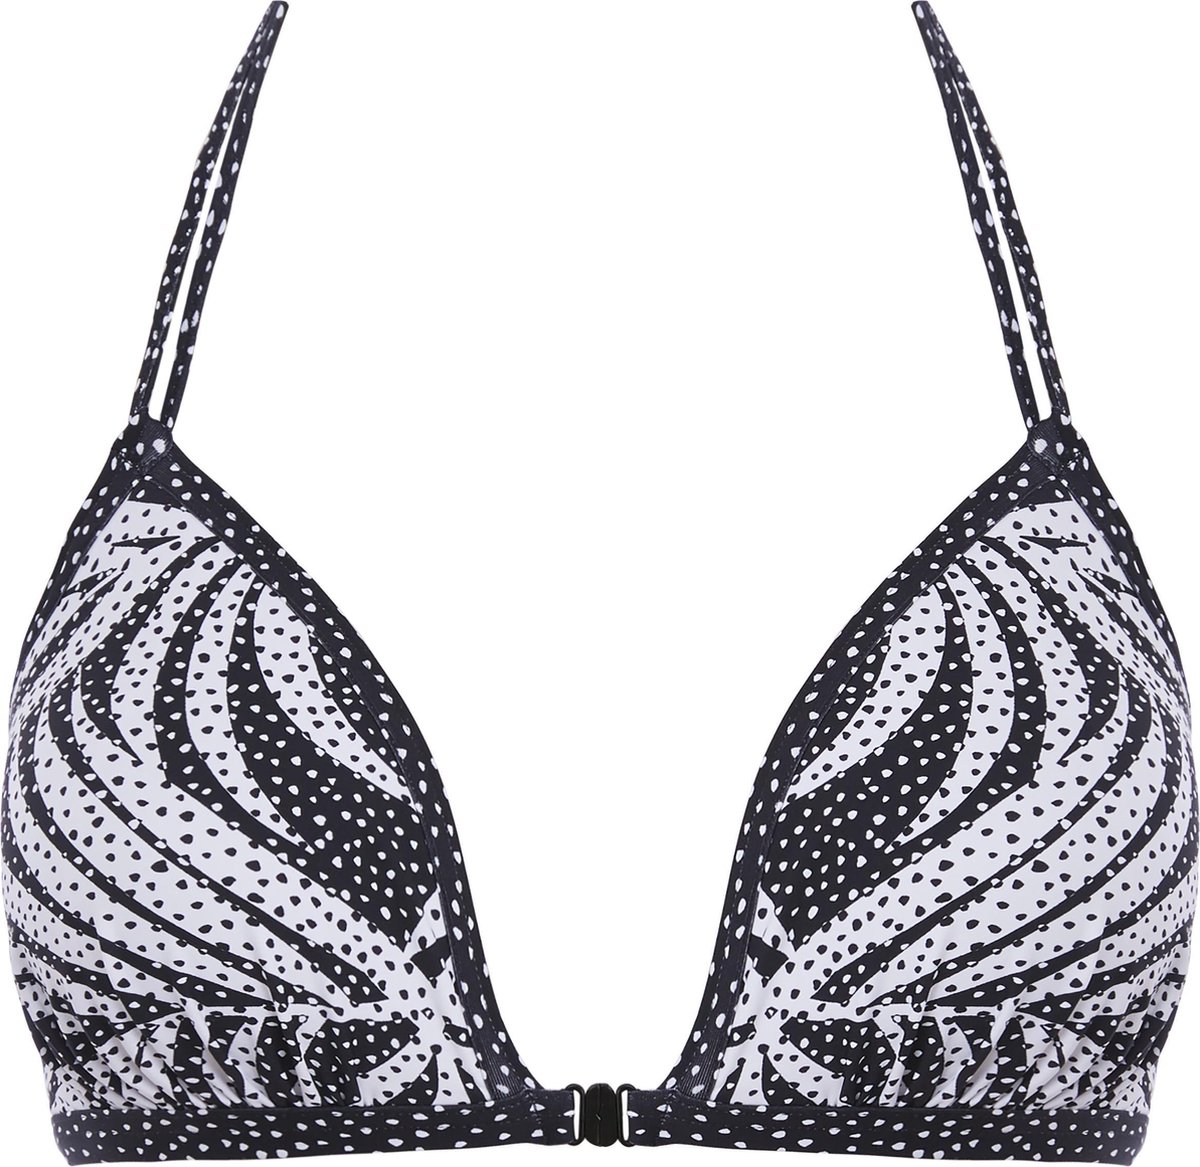 Freya Maat 65E GEMINI PALM Wired Triangle Bikini Top - MONOCHROME - Vrouwen | DGM Outlet